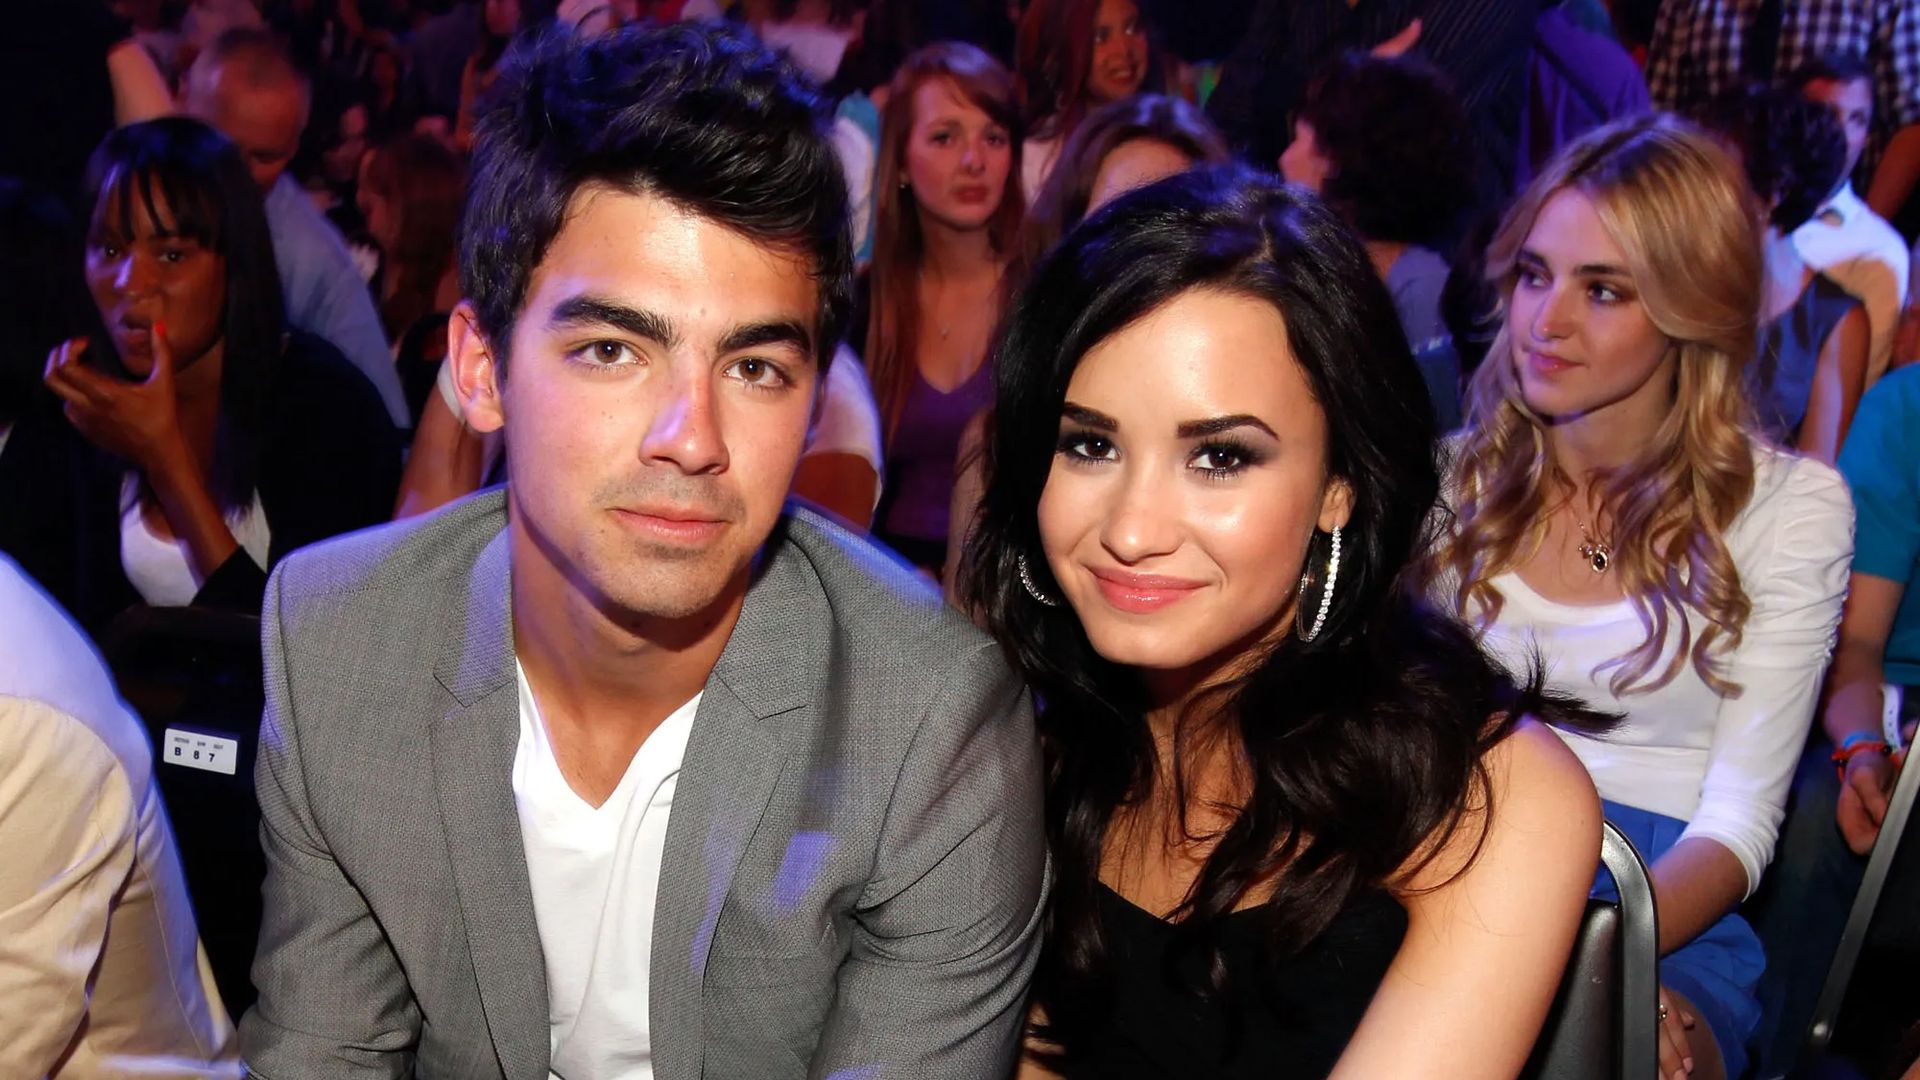 Demi Lovato and Joe Jonas dated in 2010